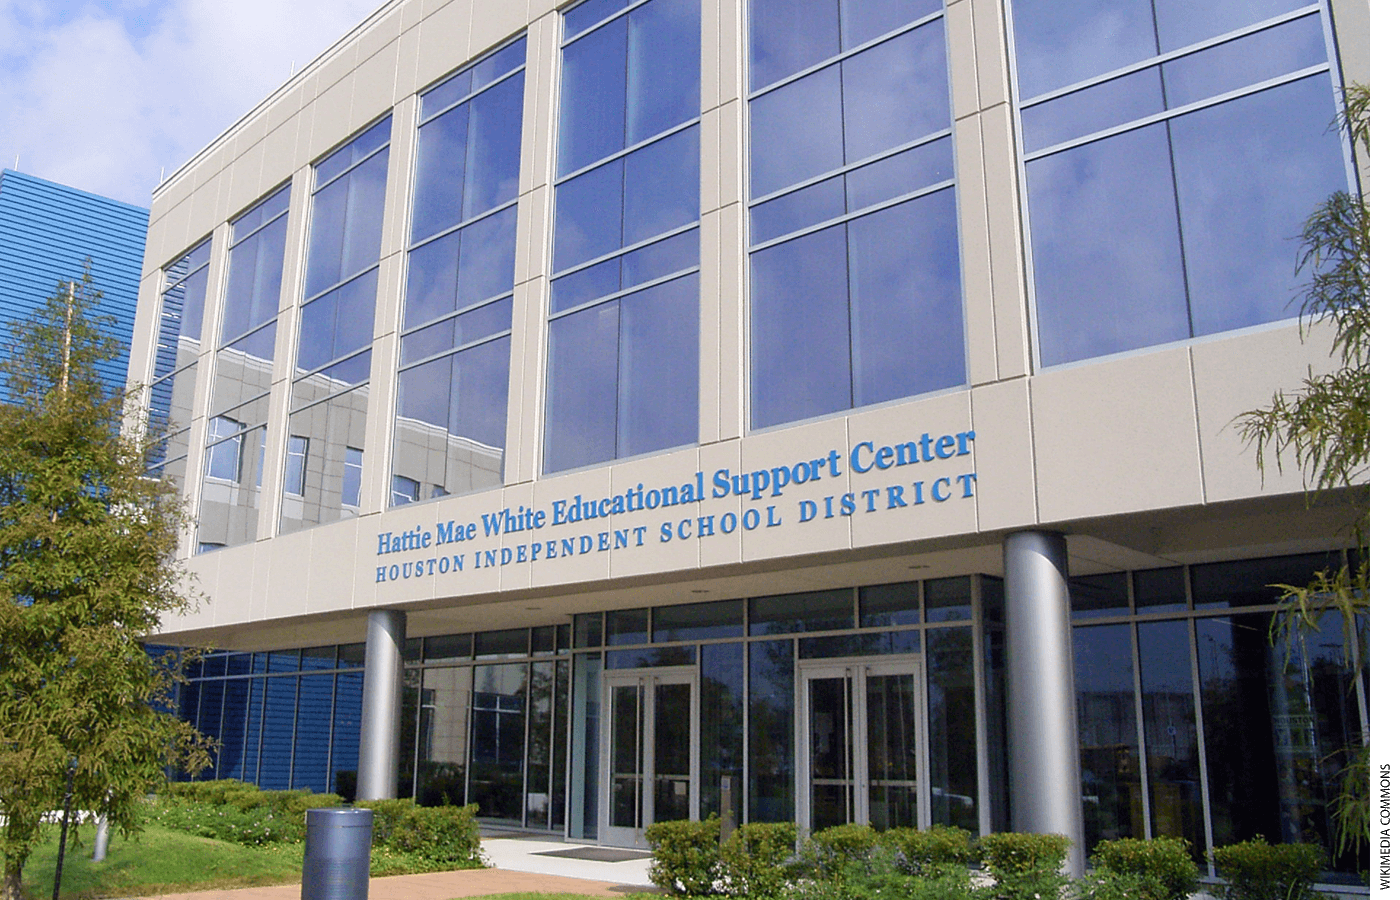 Exterior of Houston Independent School District building